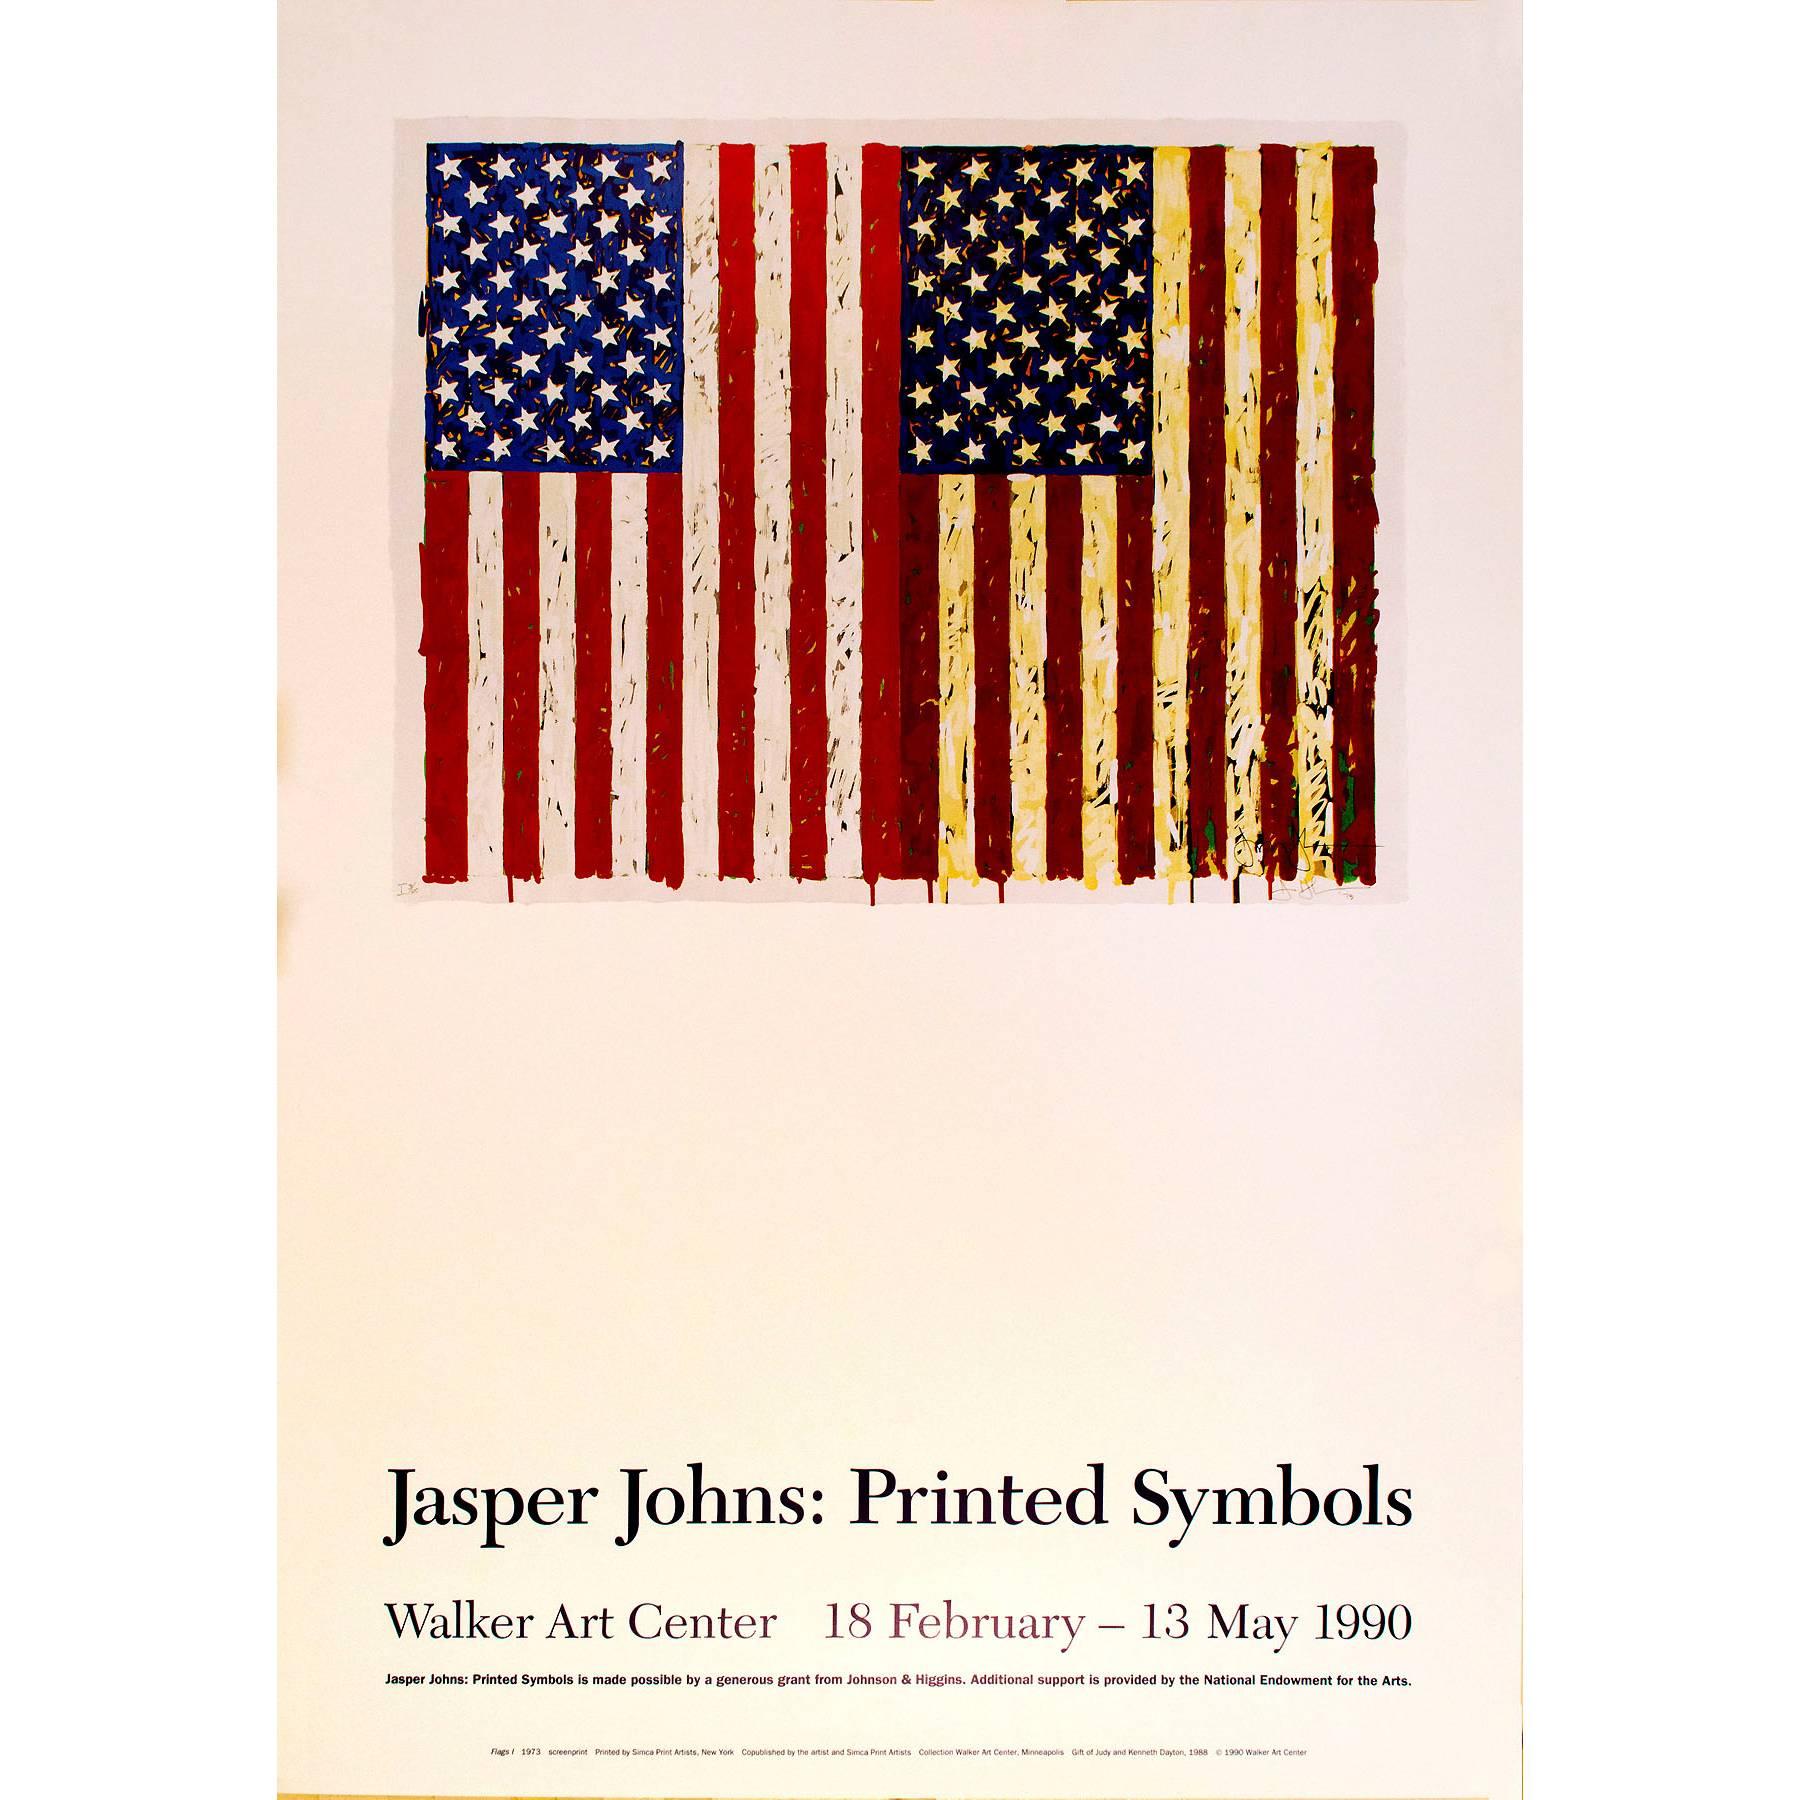 Original Jasper Johns Exhibit Poster by Jasper Johns, 1973